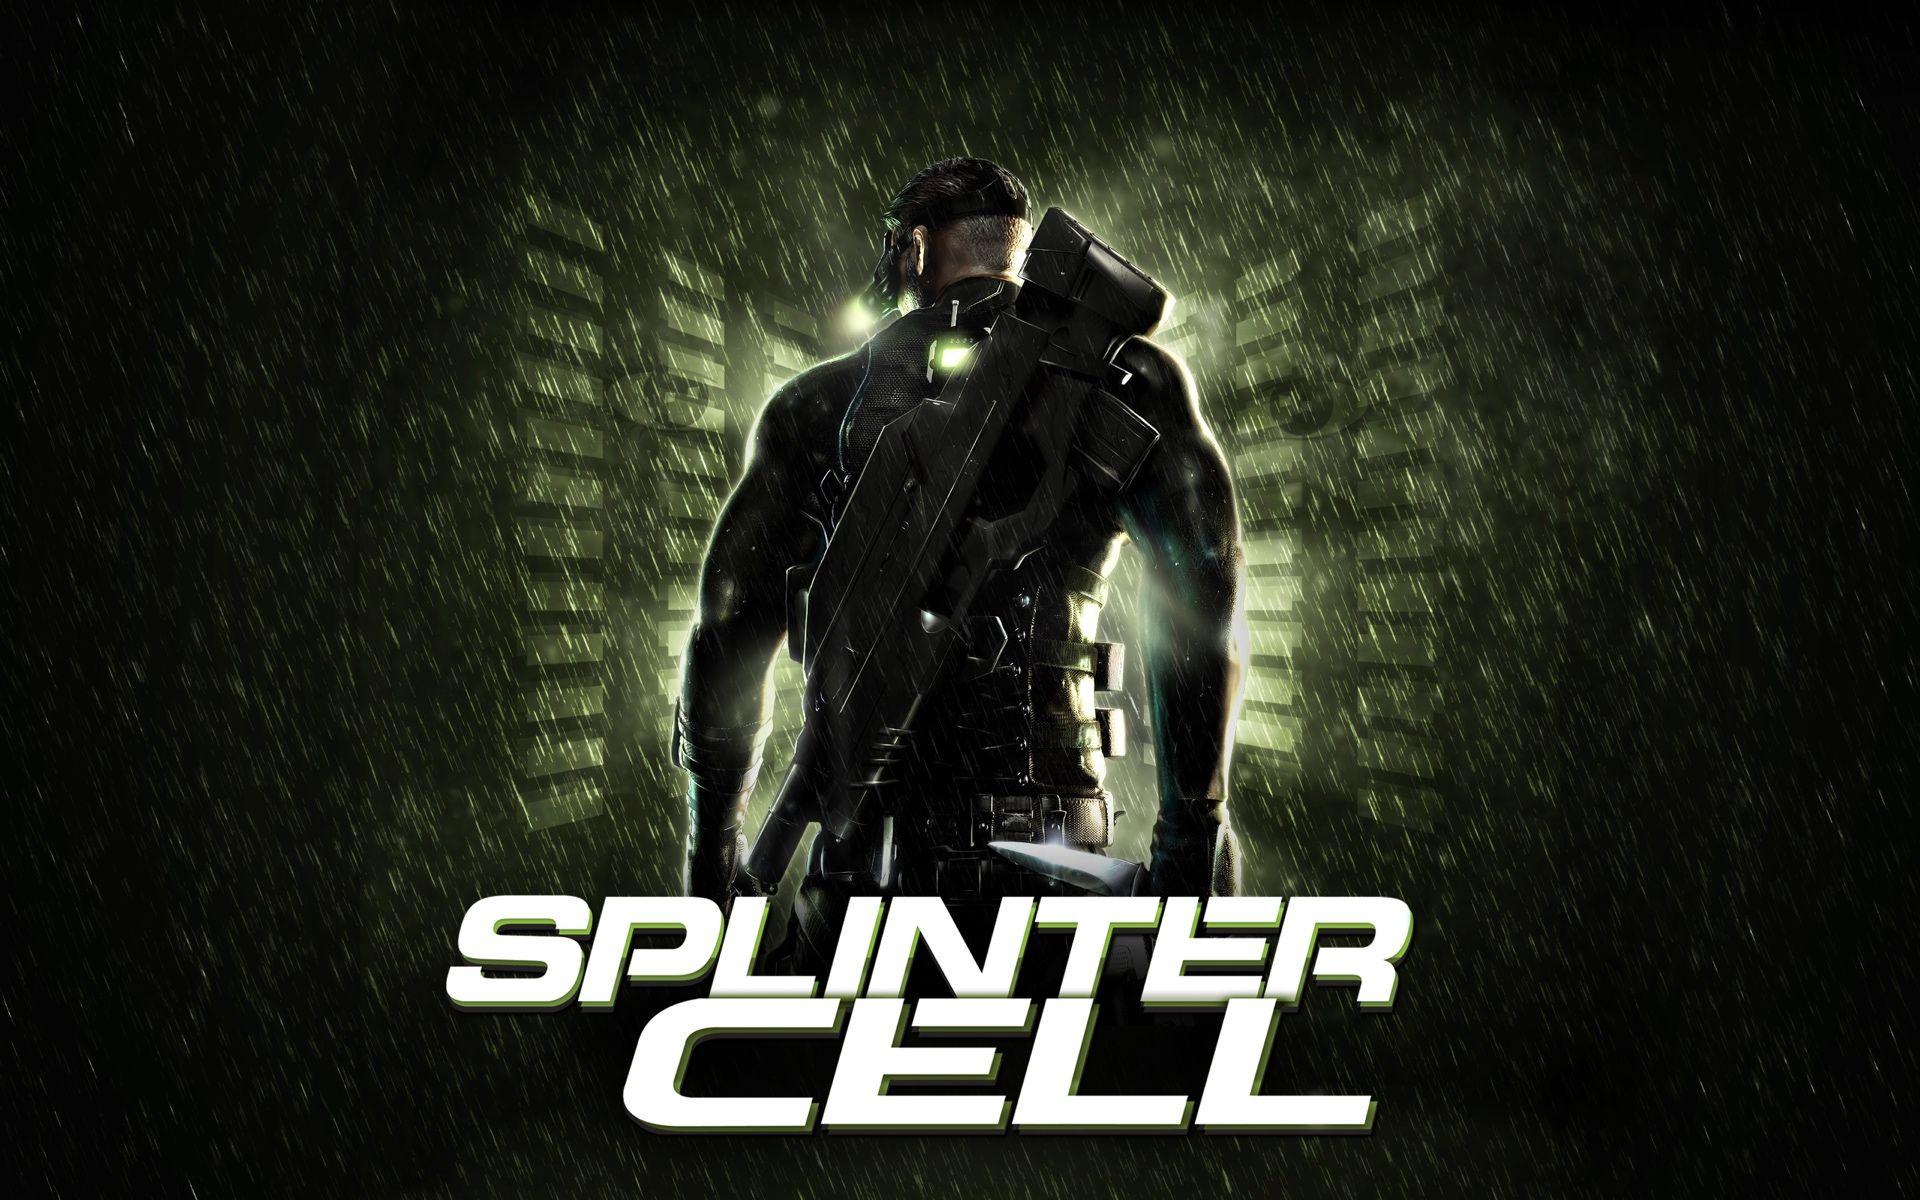 Will a new 'Splinter Cell' game splinter or sell?